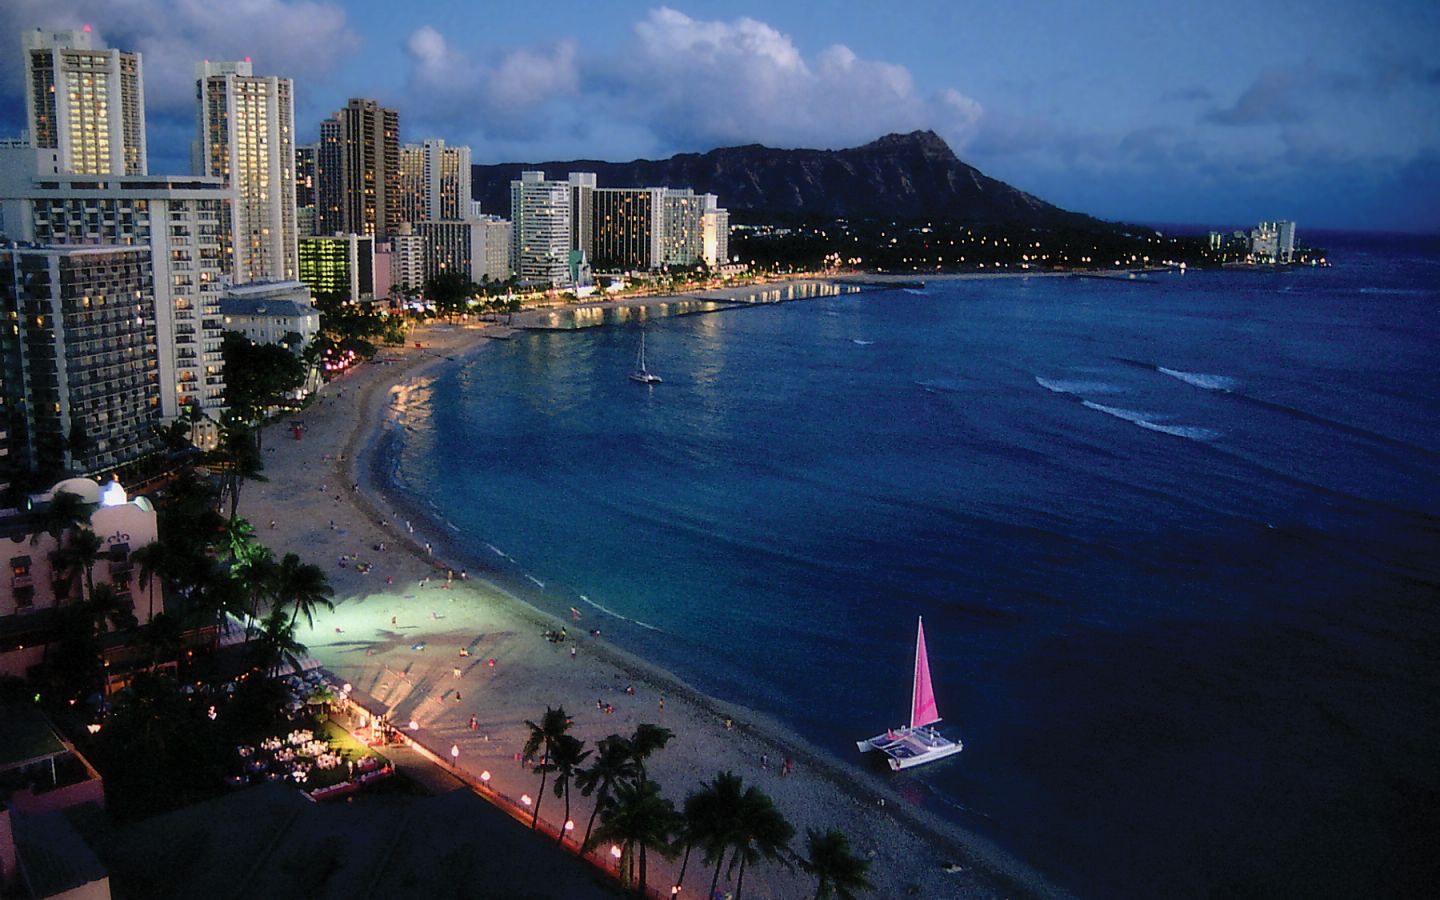 Evening scenery of Waikiki - 1440x900